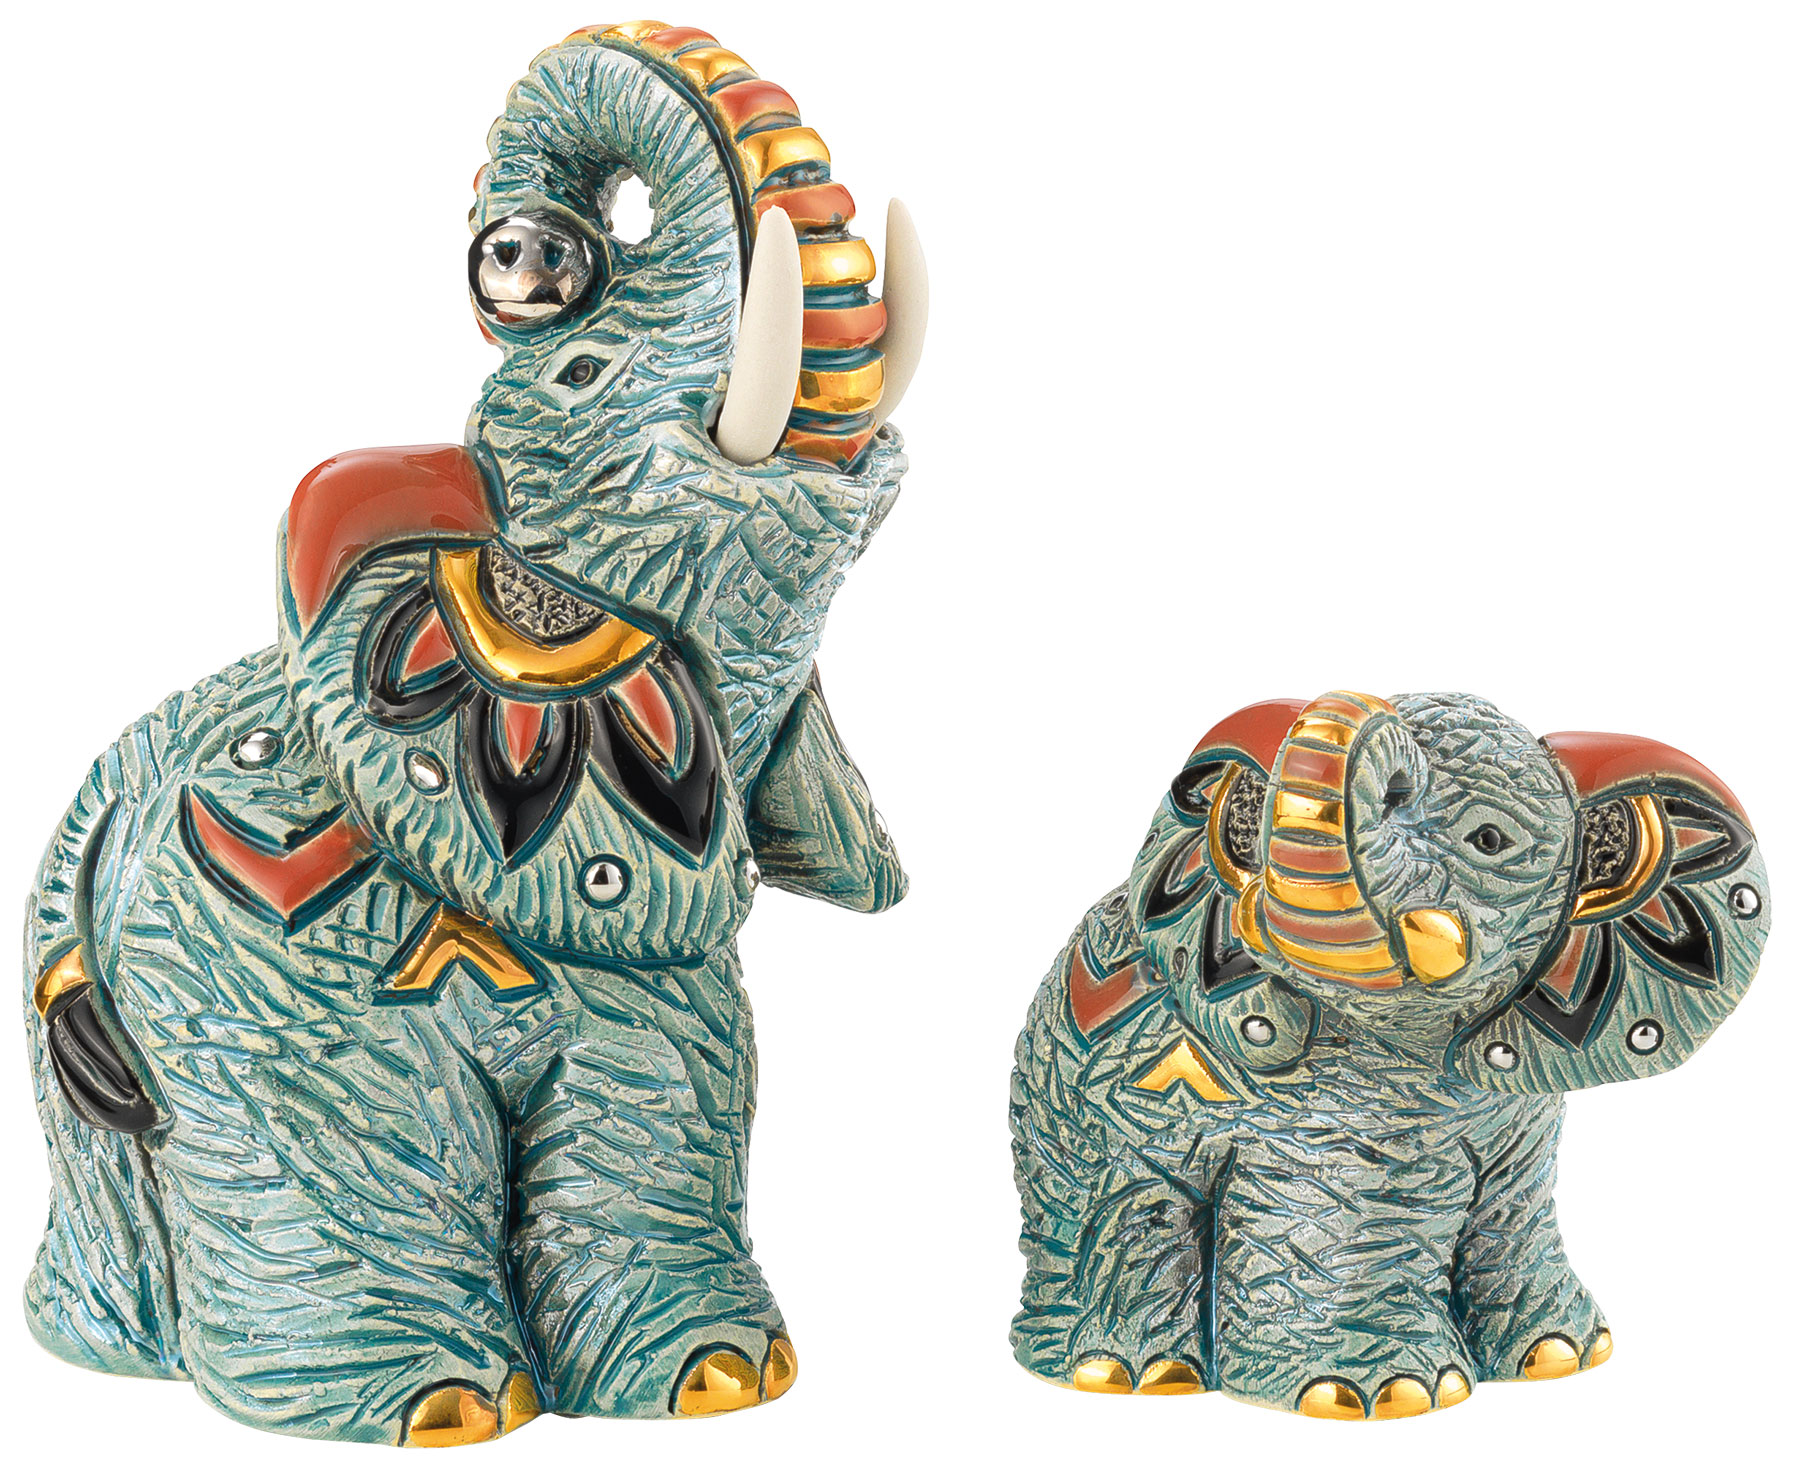 Set of 2 ceramic figurines "Elephant Family"